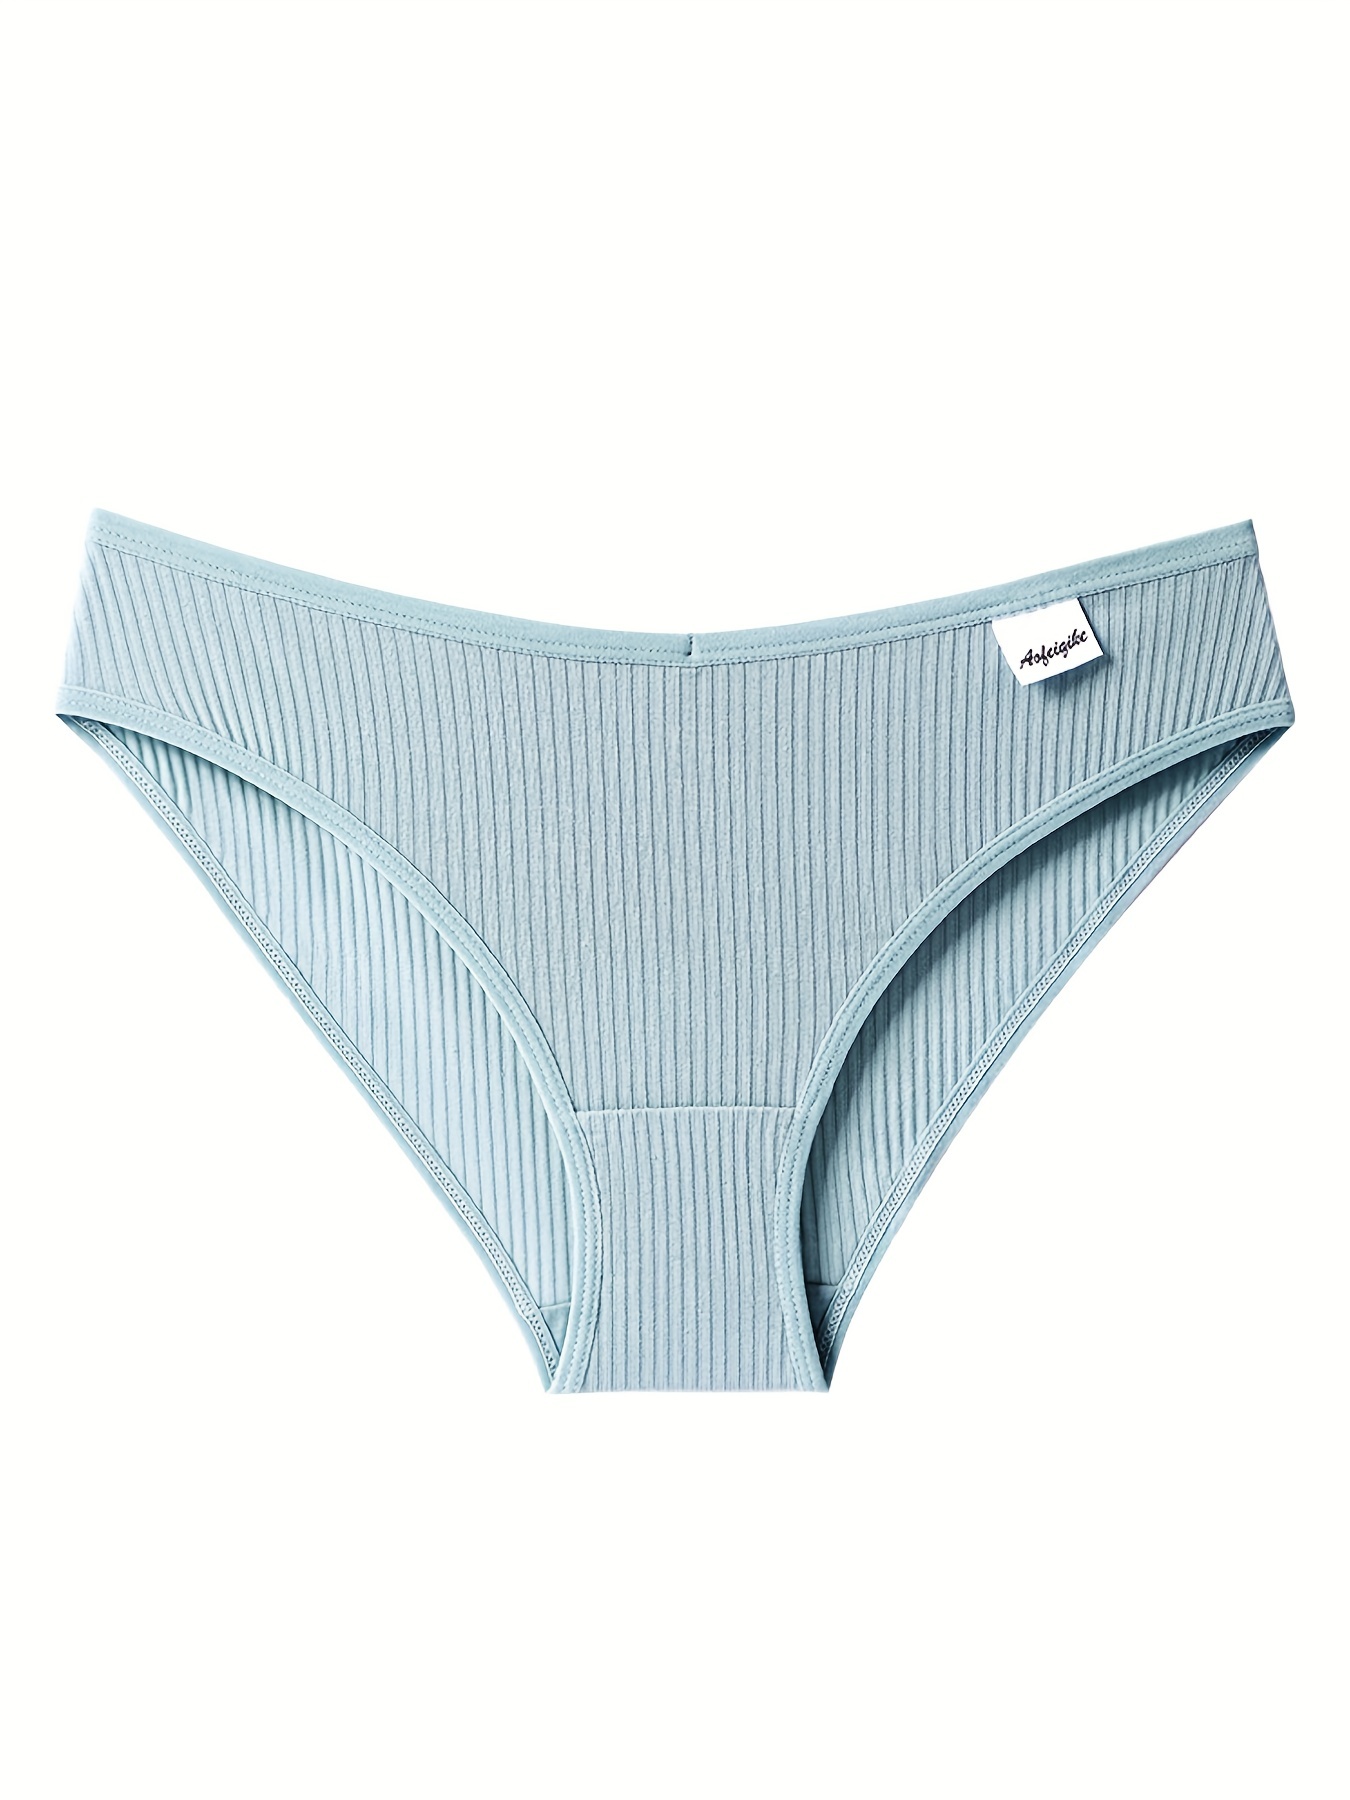 Women Seamless Low Rise Underwear Comfy Lingerie Comfort